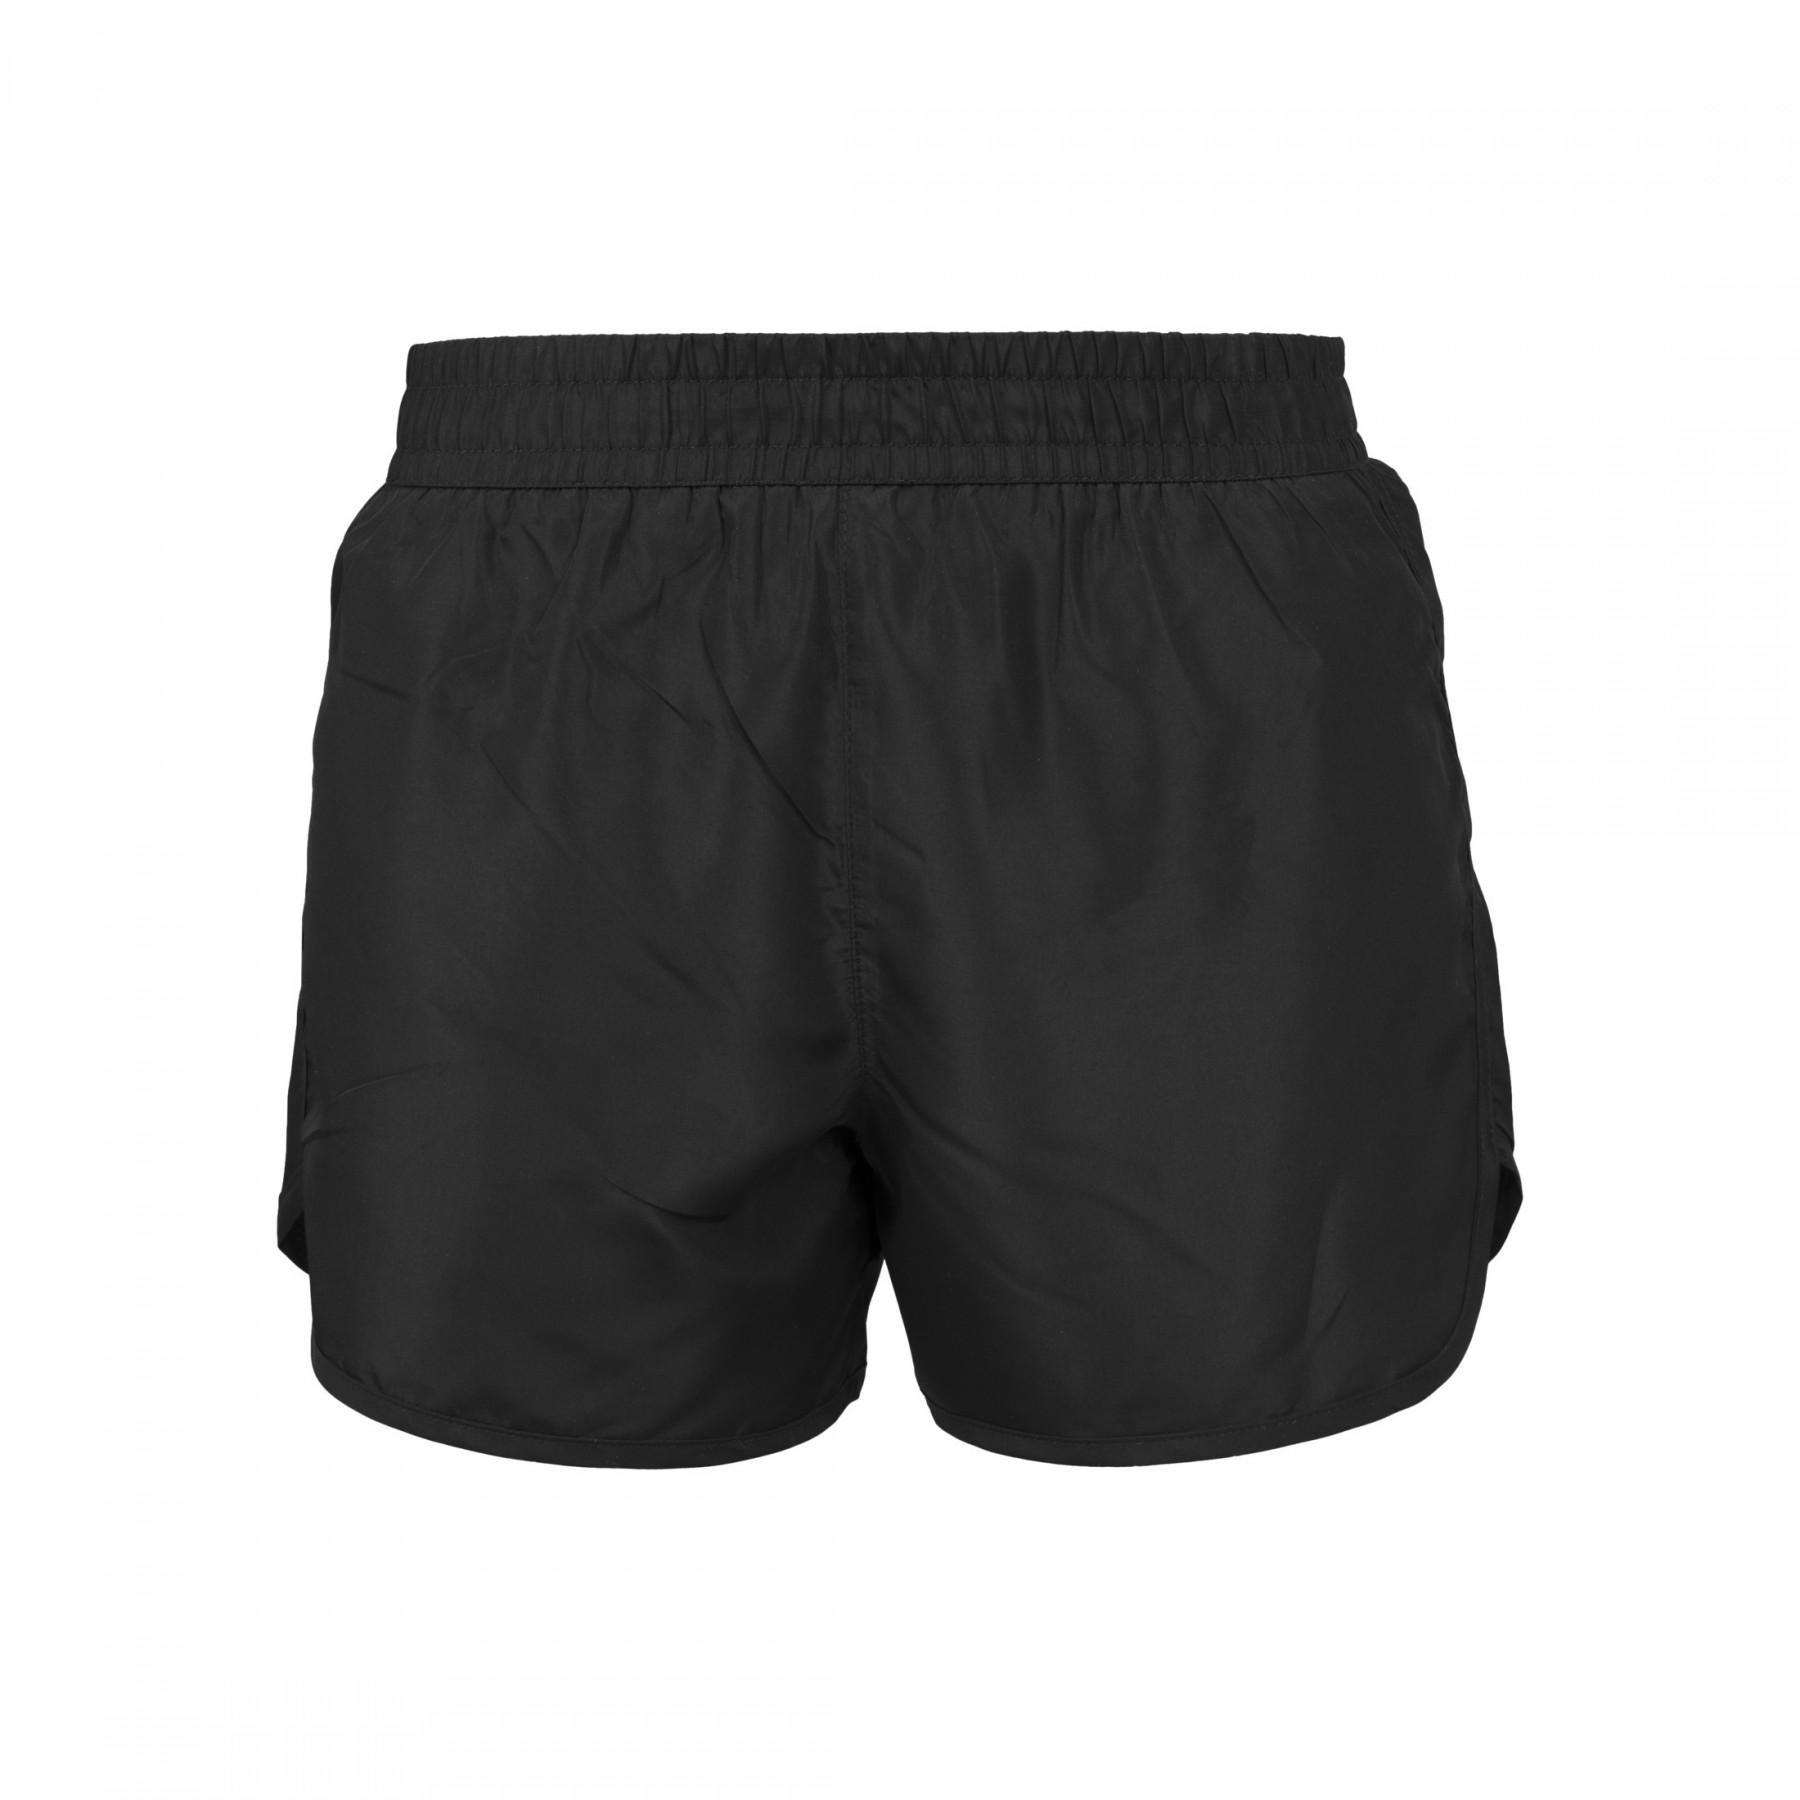 Women's Urban Classic sport shorts